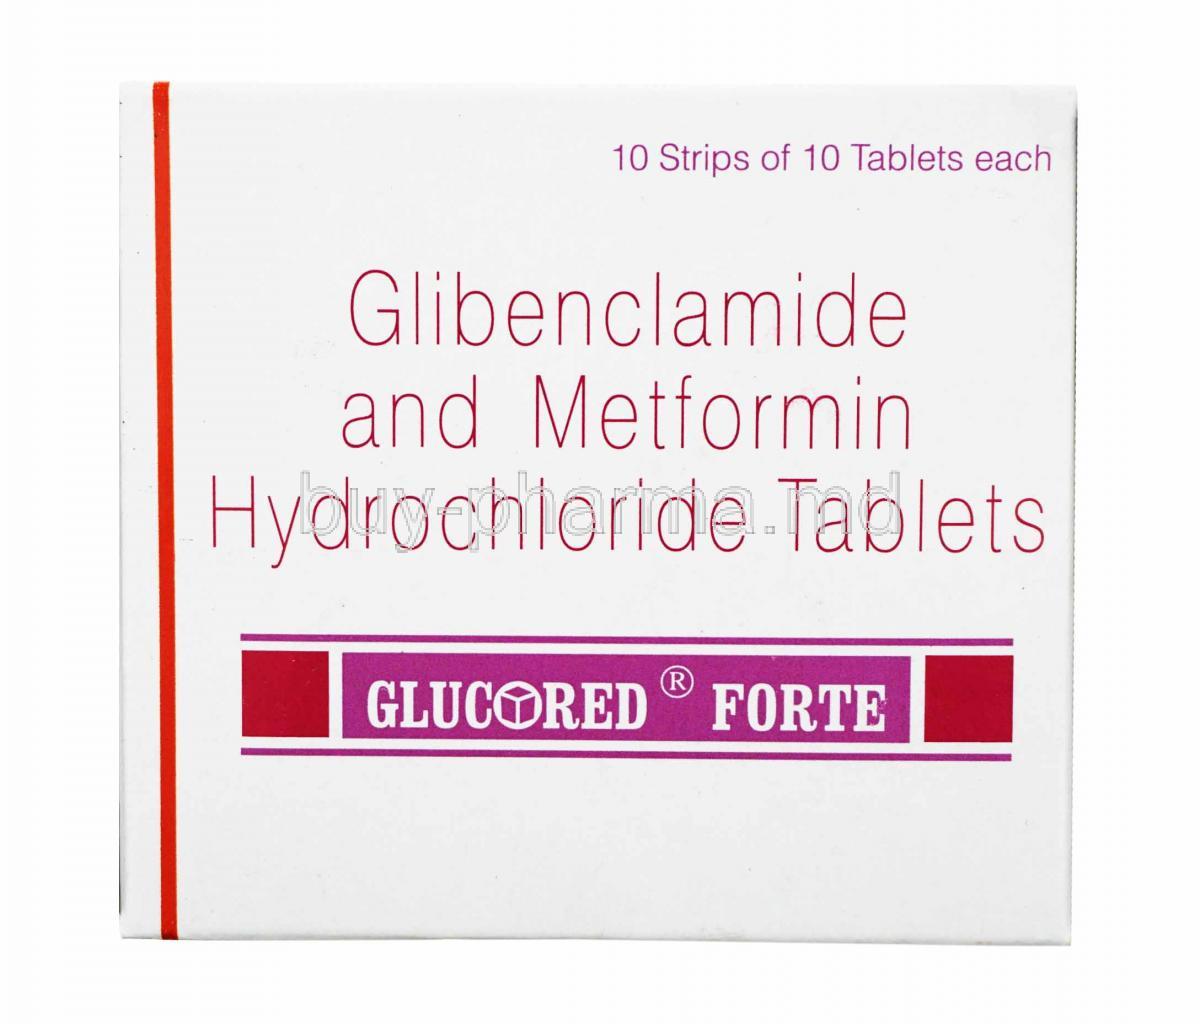 Glucored Forte, Glibenclamide and Metformin box